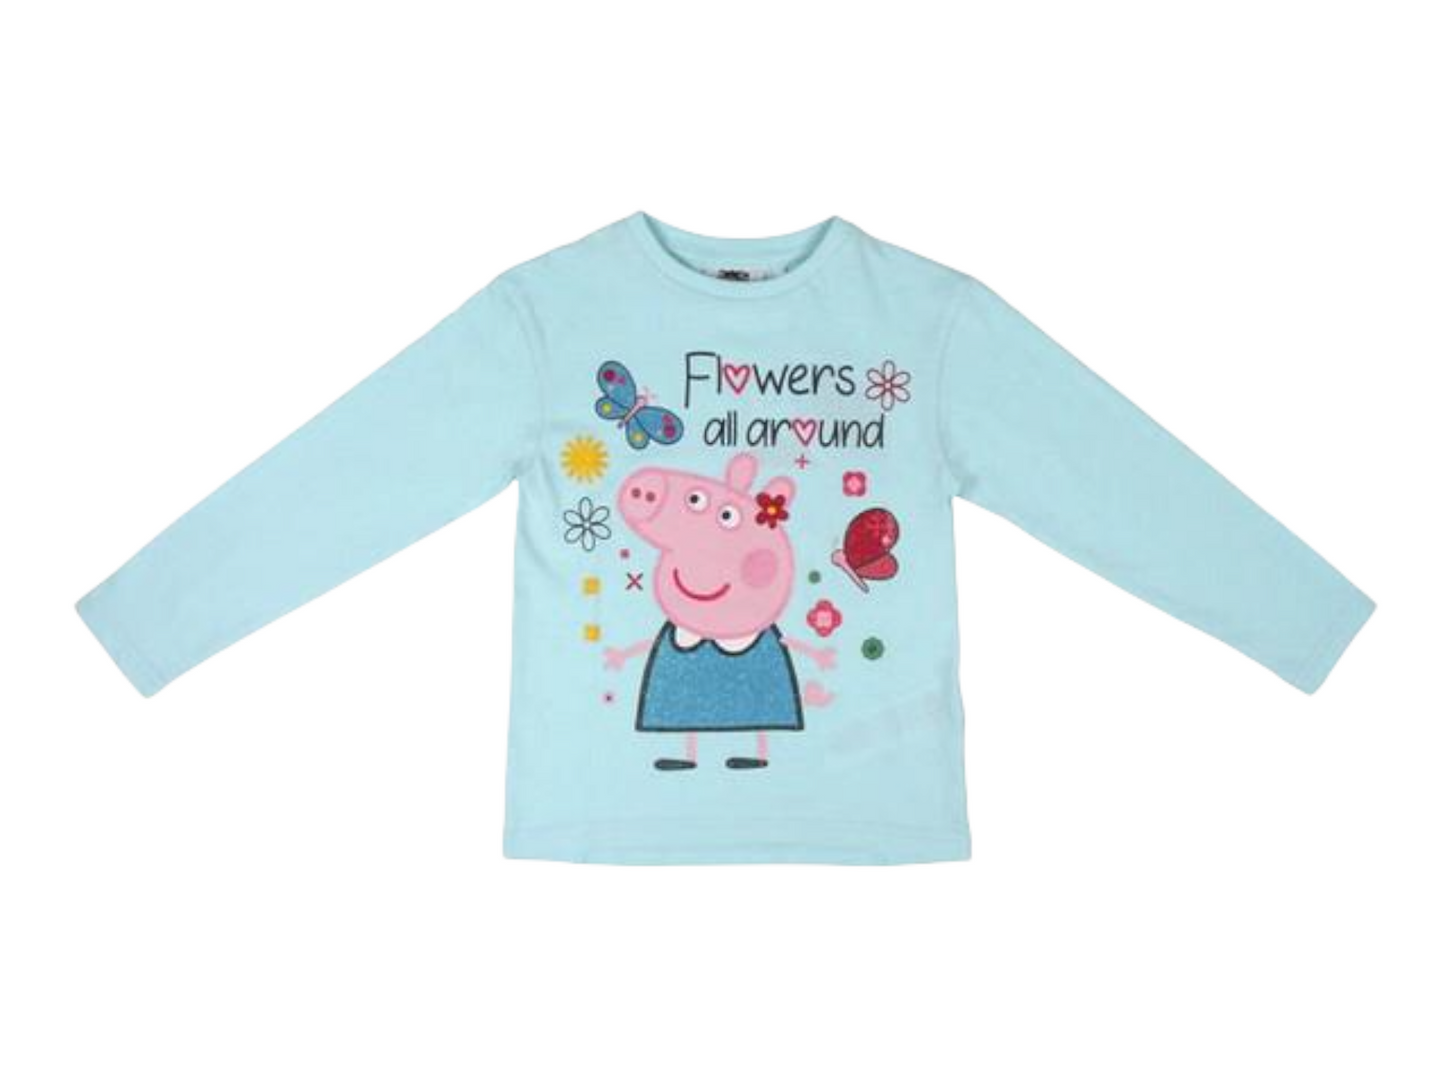 Langarm T-Shirt für Kinder Peppa Pig